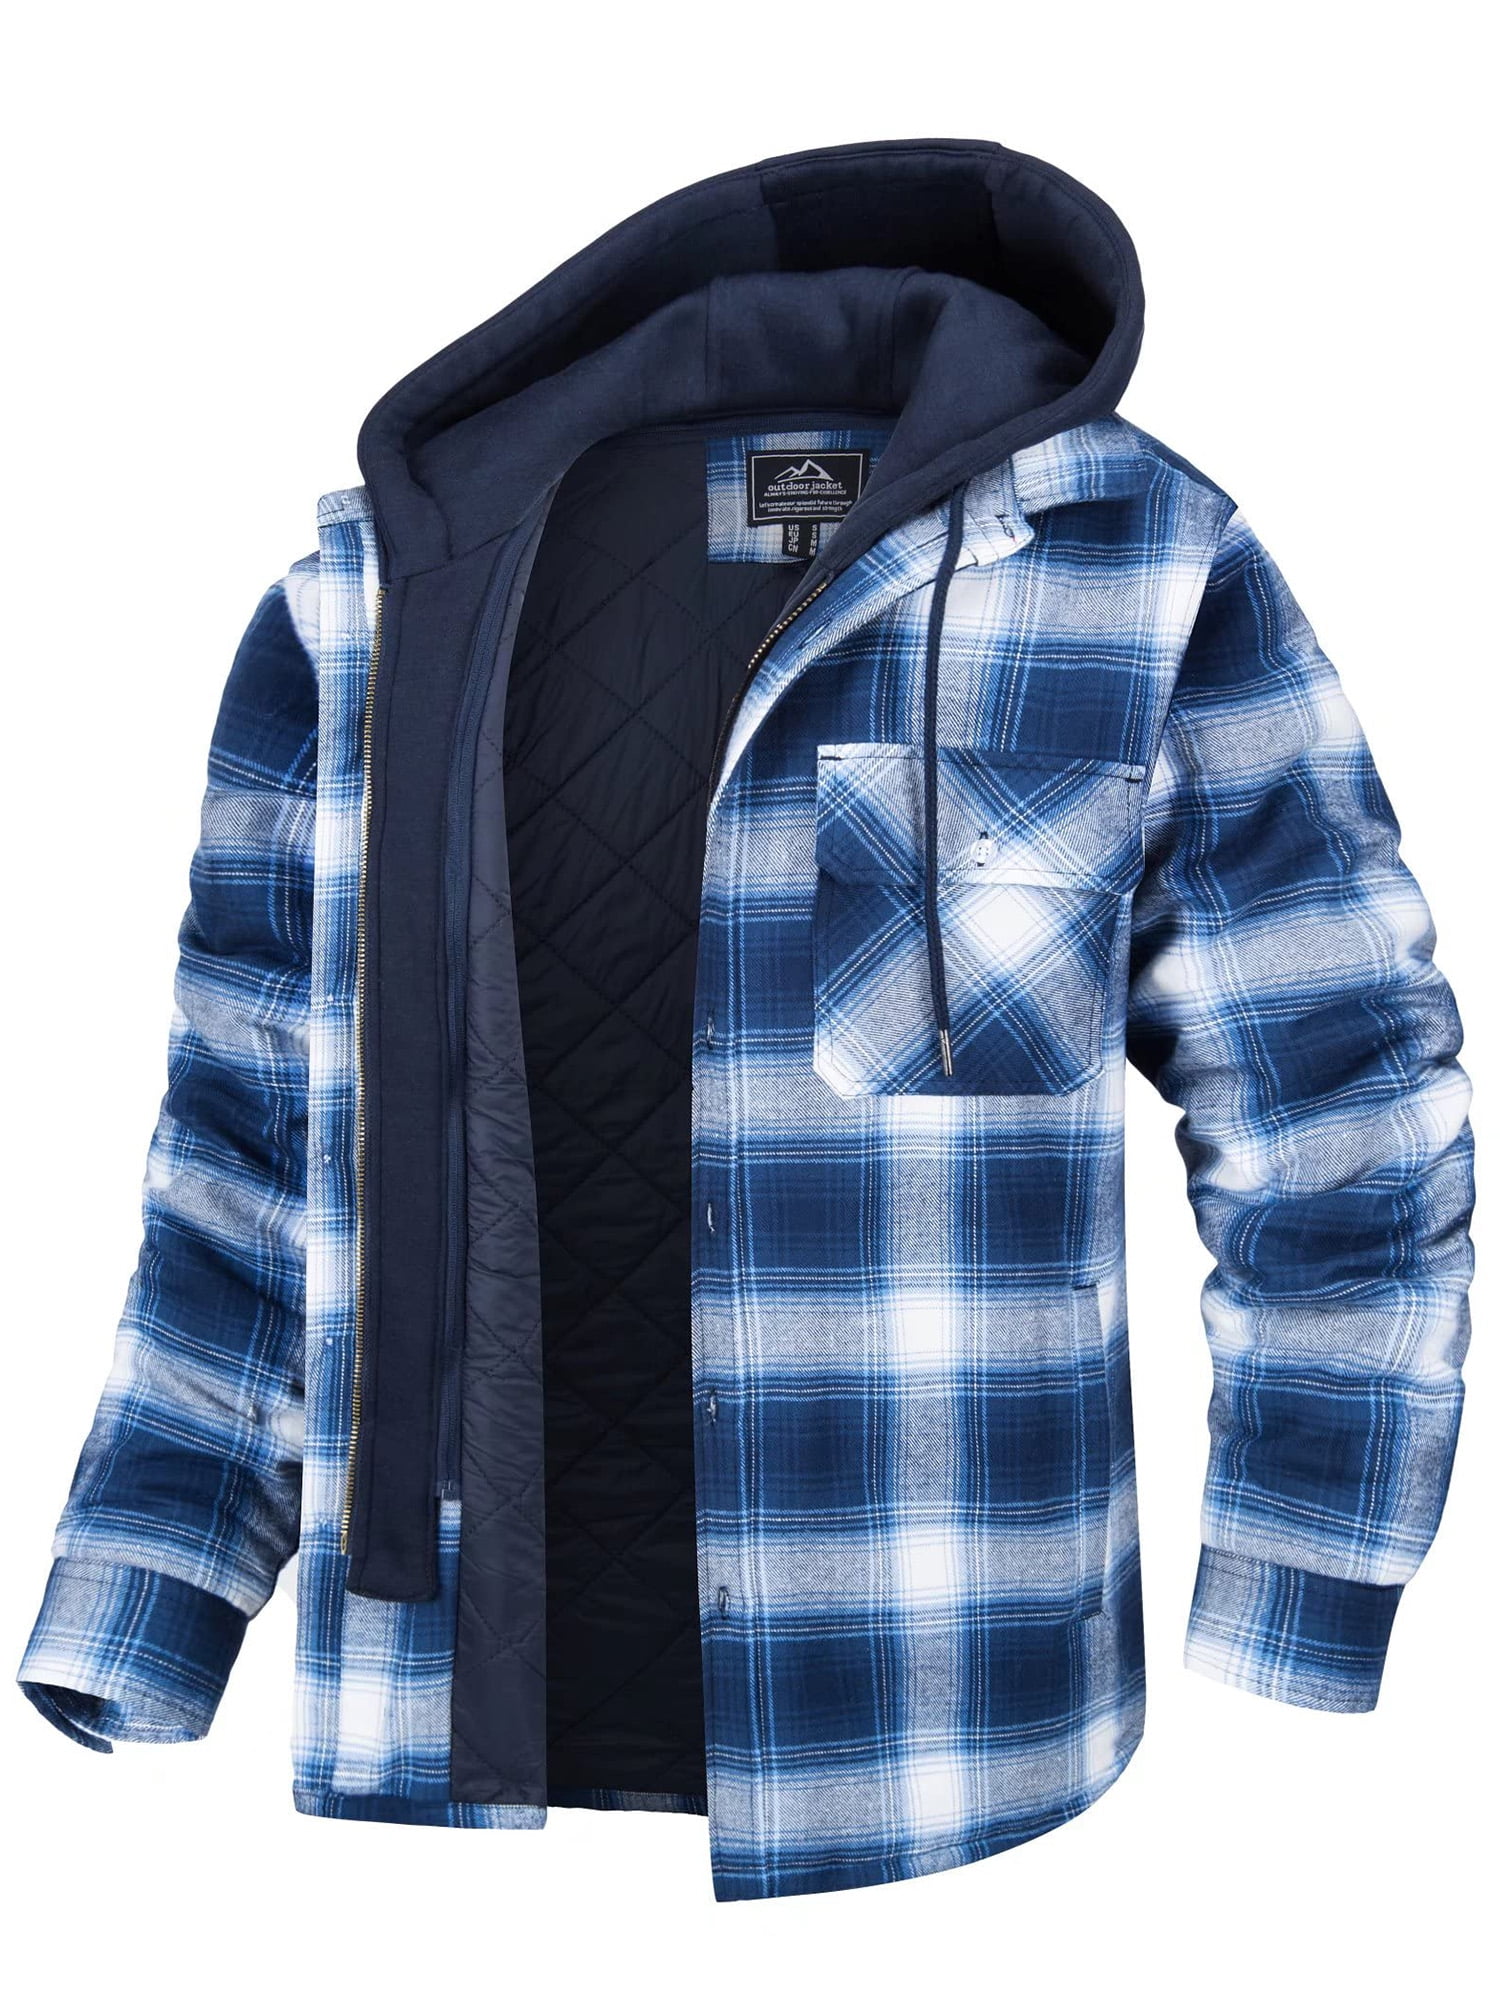 Sanviglor Mens Jackets Quilted Lined Outwear Hooded Shirt Jacket Flannel  Coat Winter Sky Blue XL